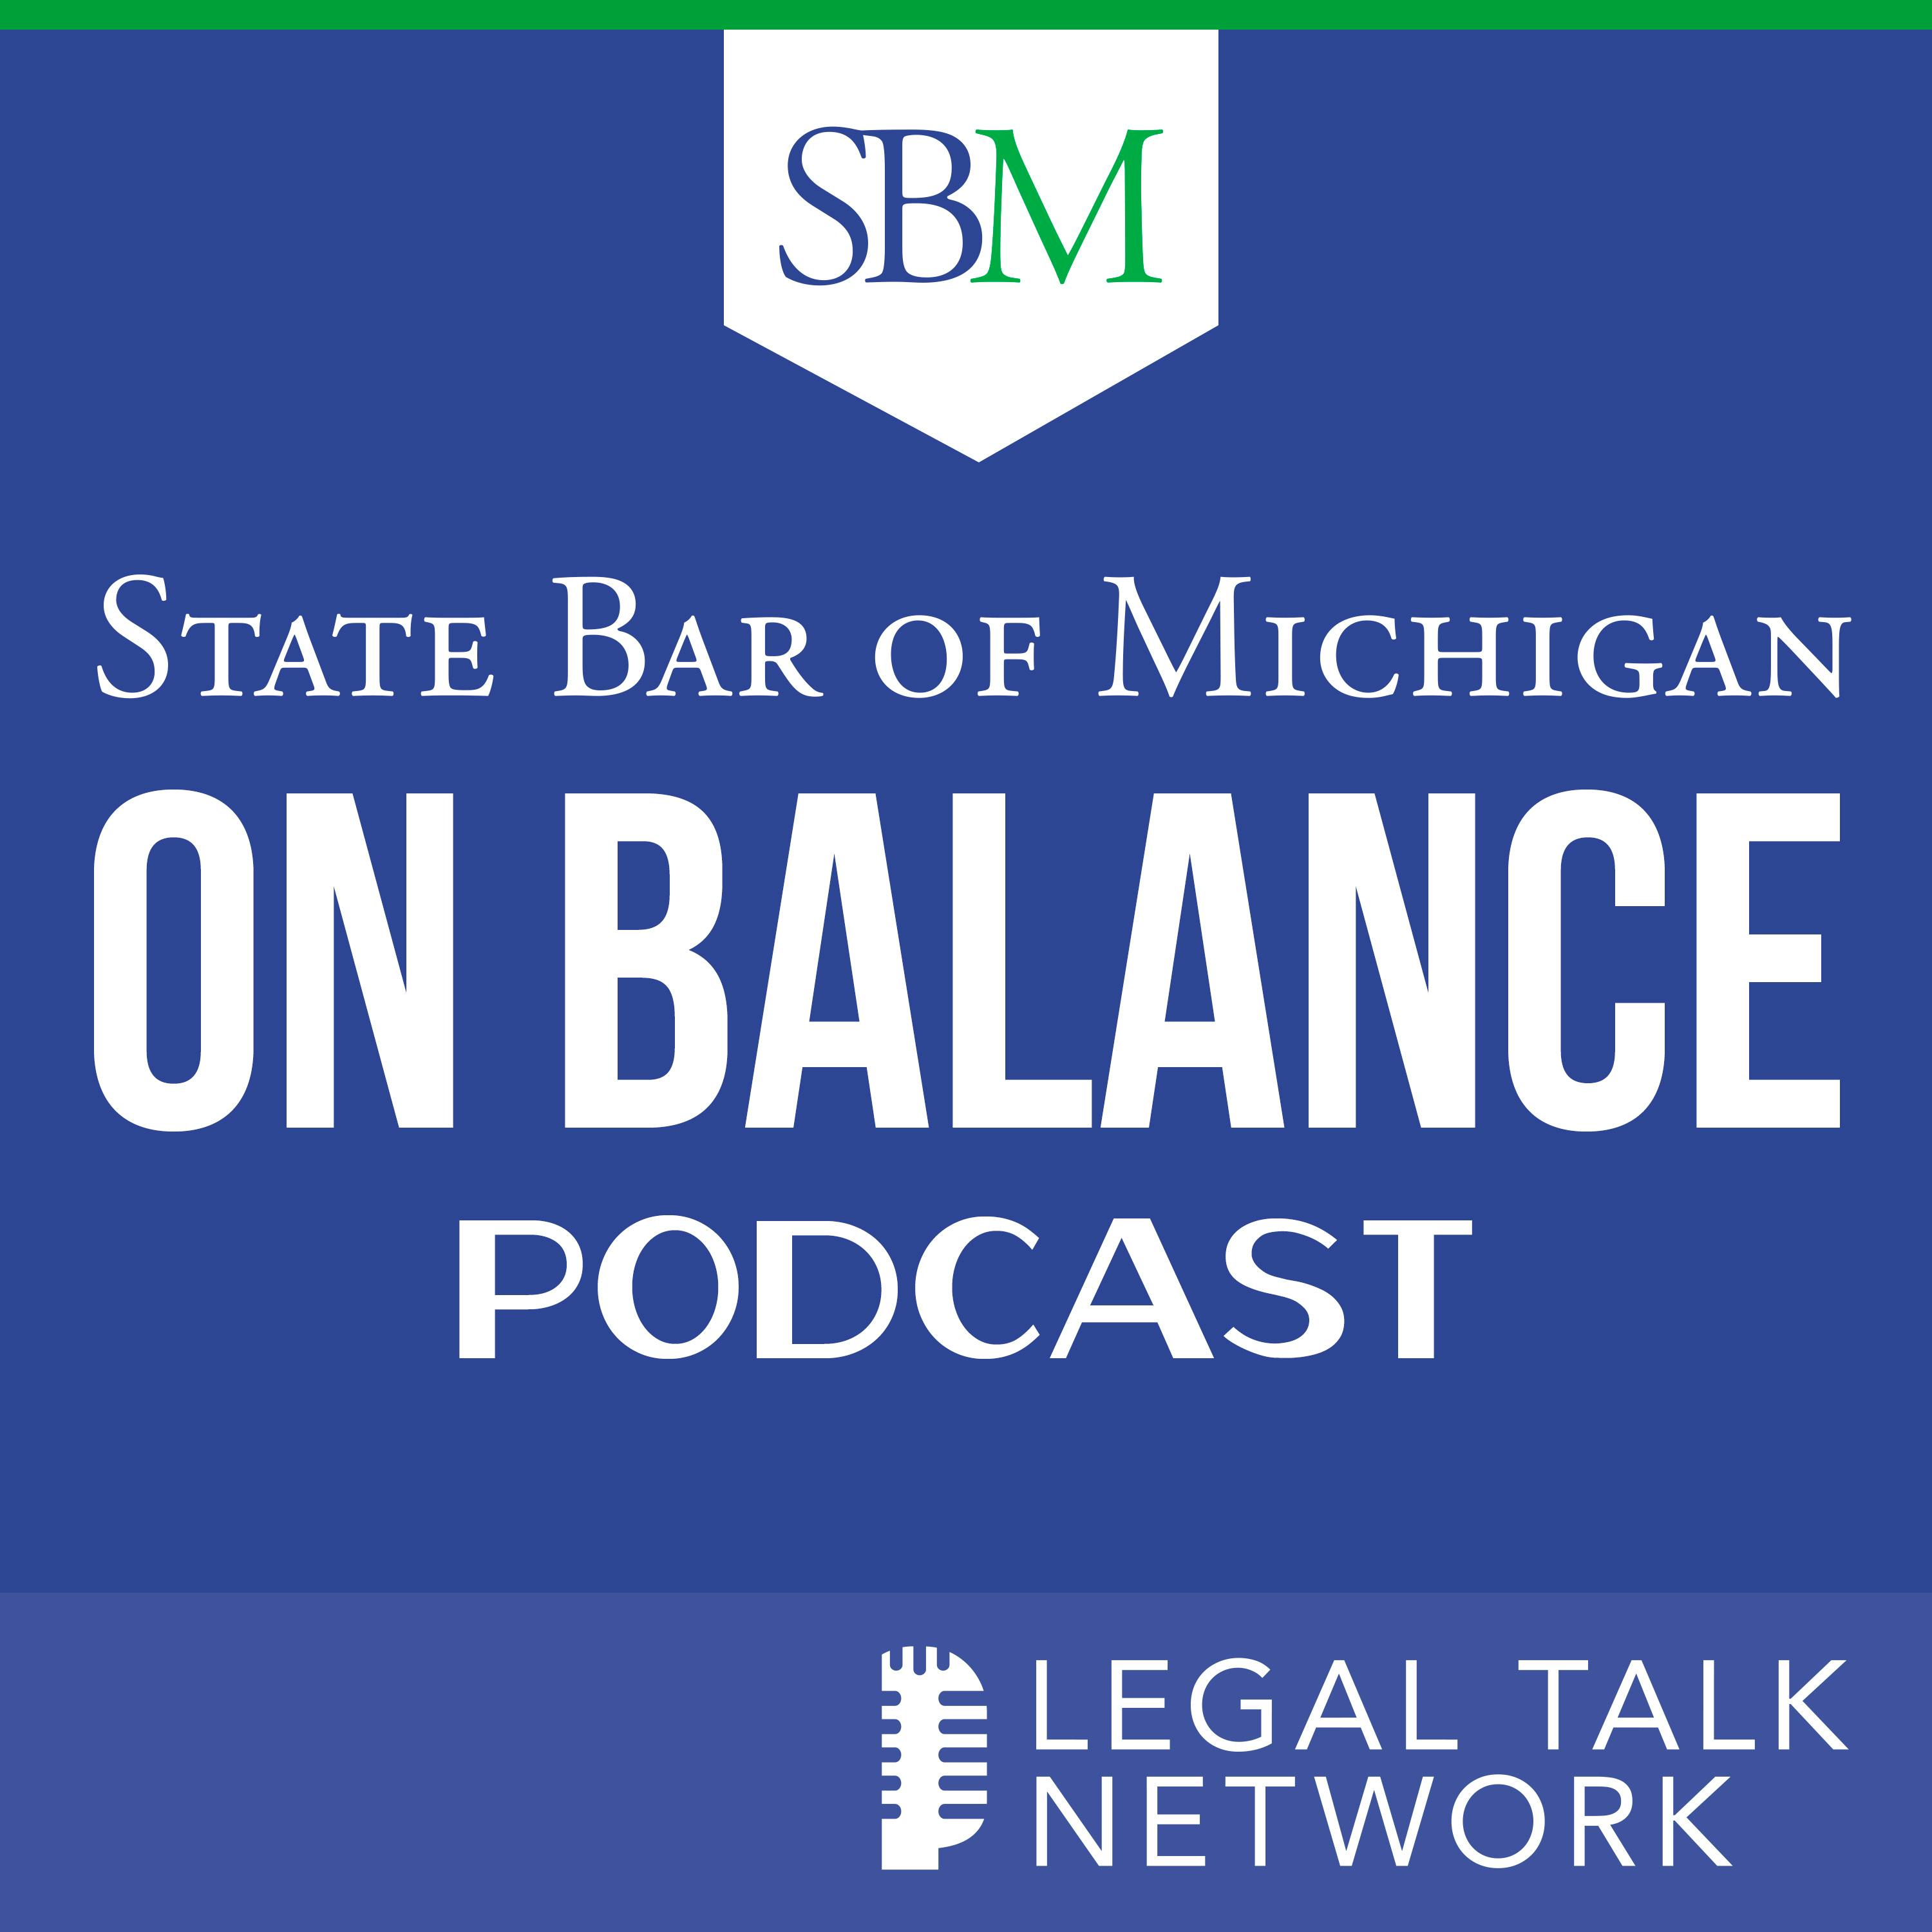 State Bar of Michigan NEXT Conference 2018: Balancing Career and Life